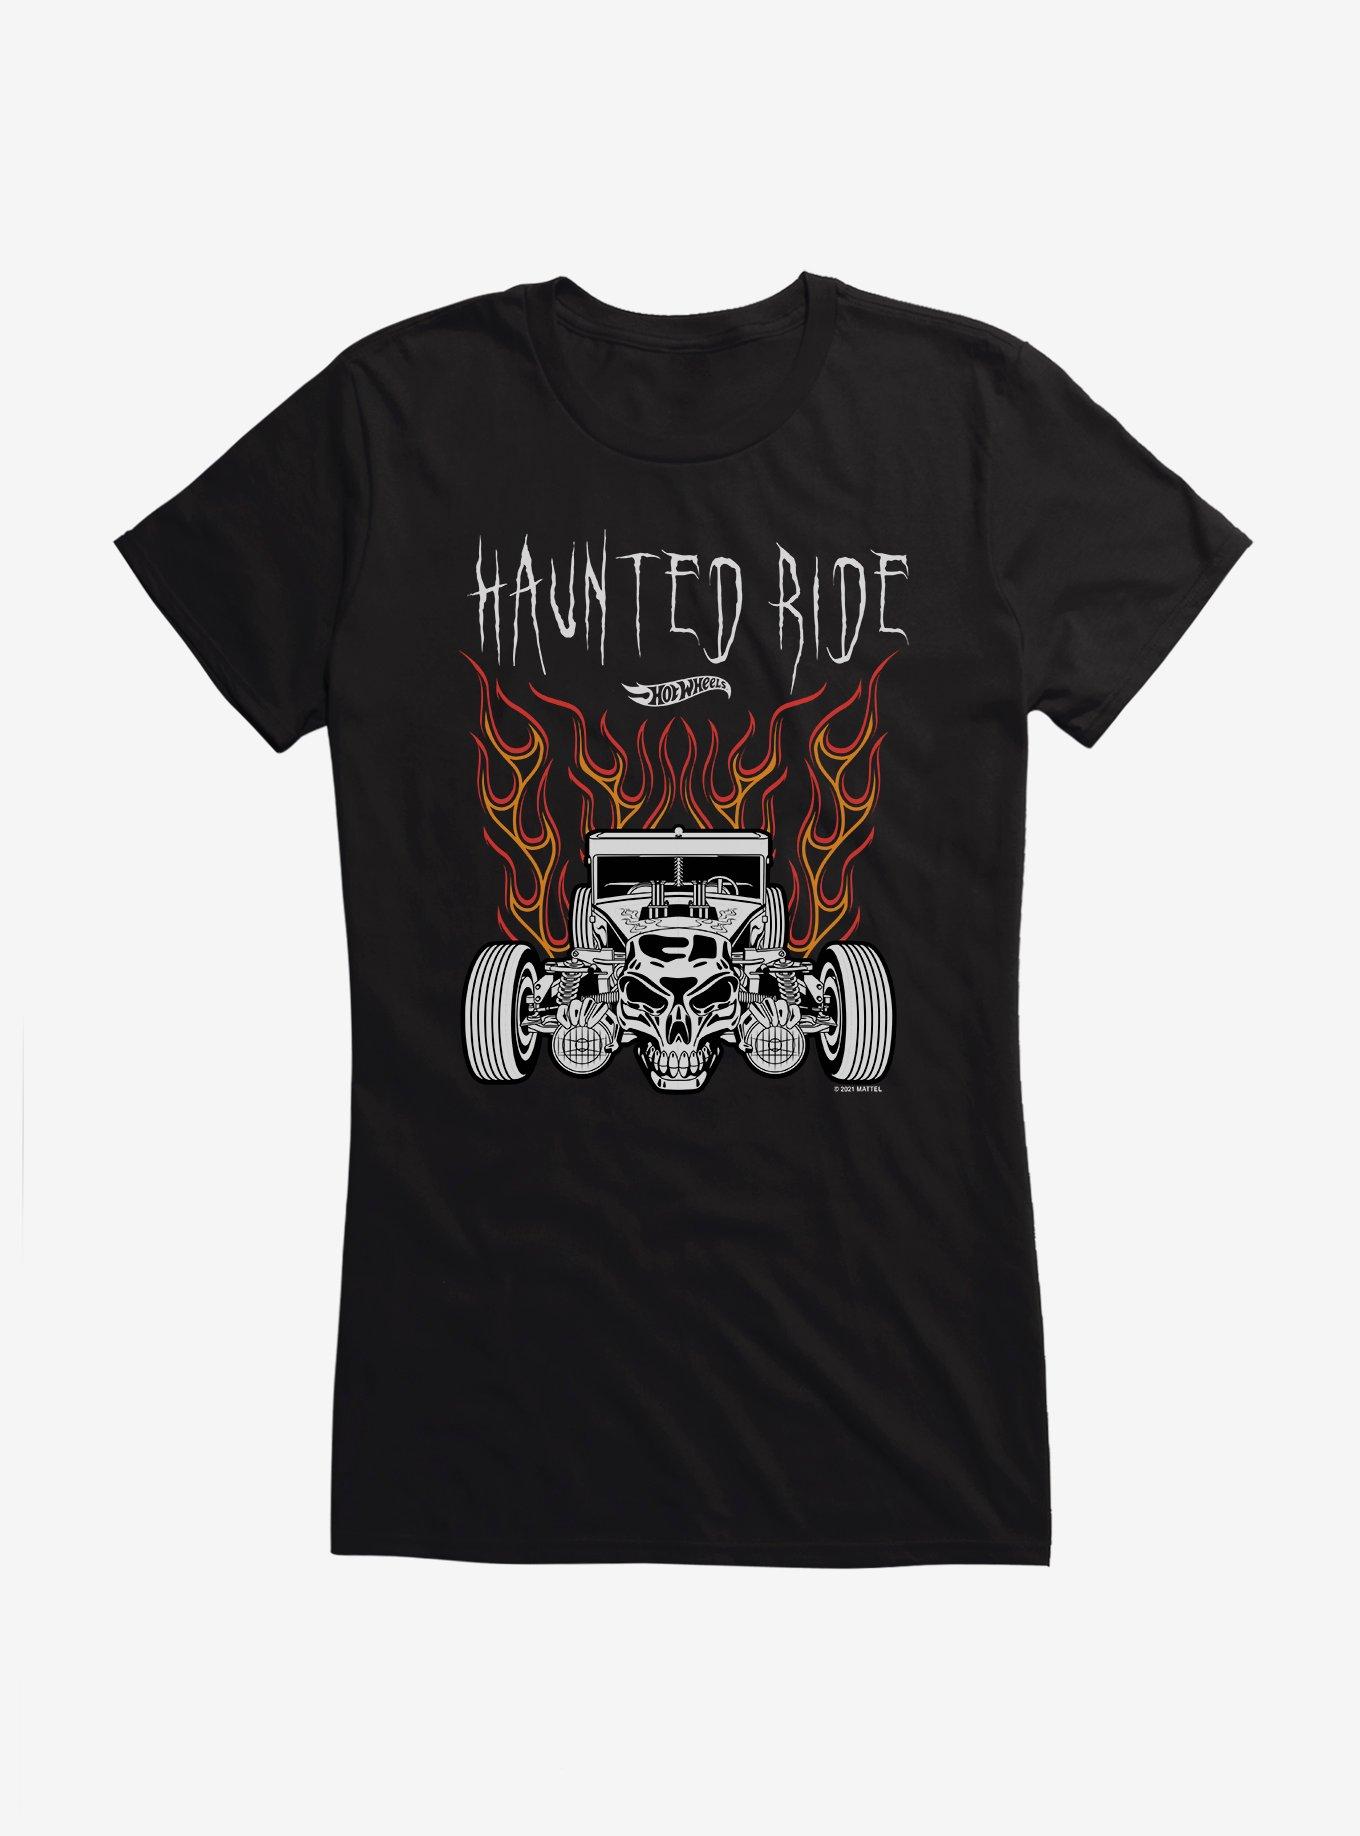 Hot Wheels Haunted Ride Girls T-Shirt, BLACK, hi-res